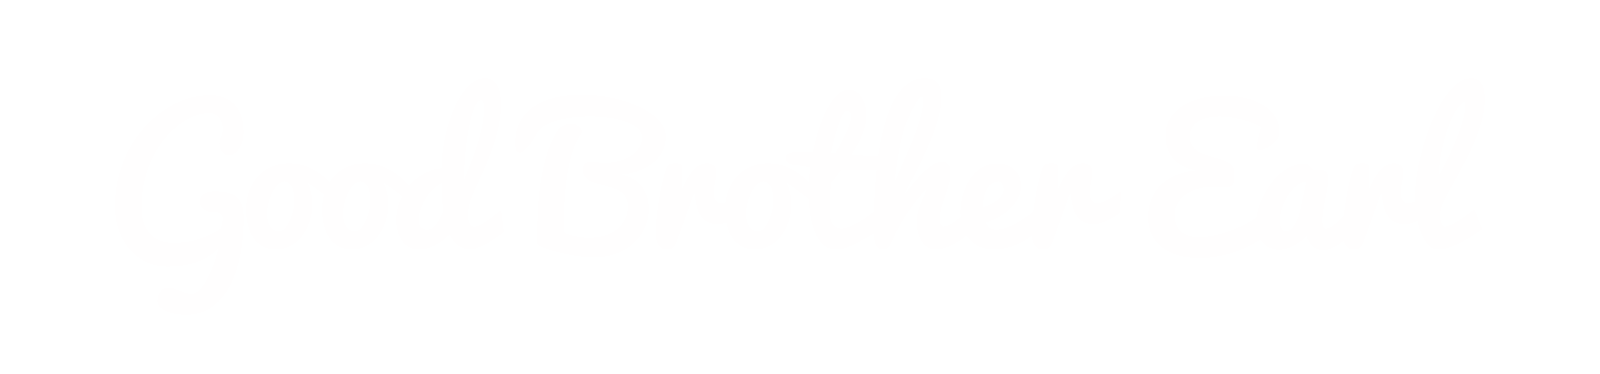 goodbrotherearl-white